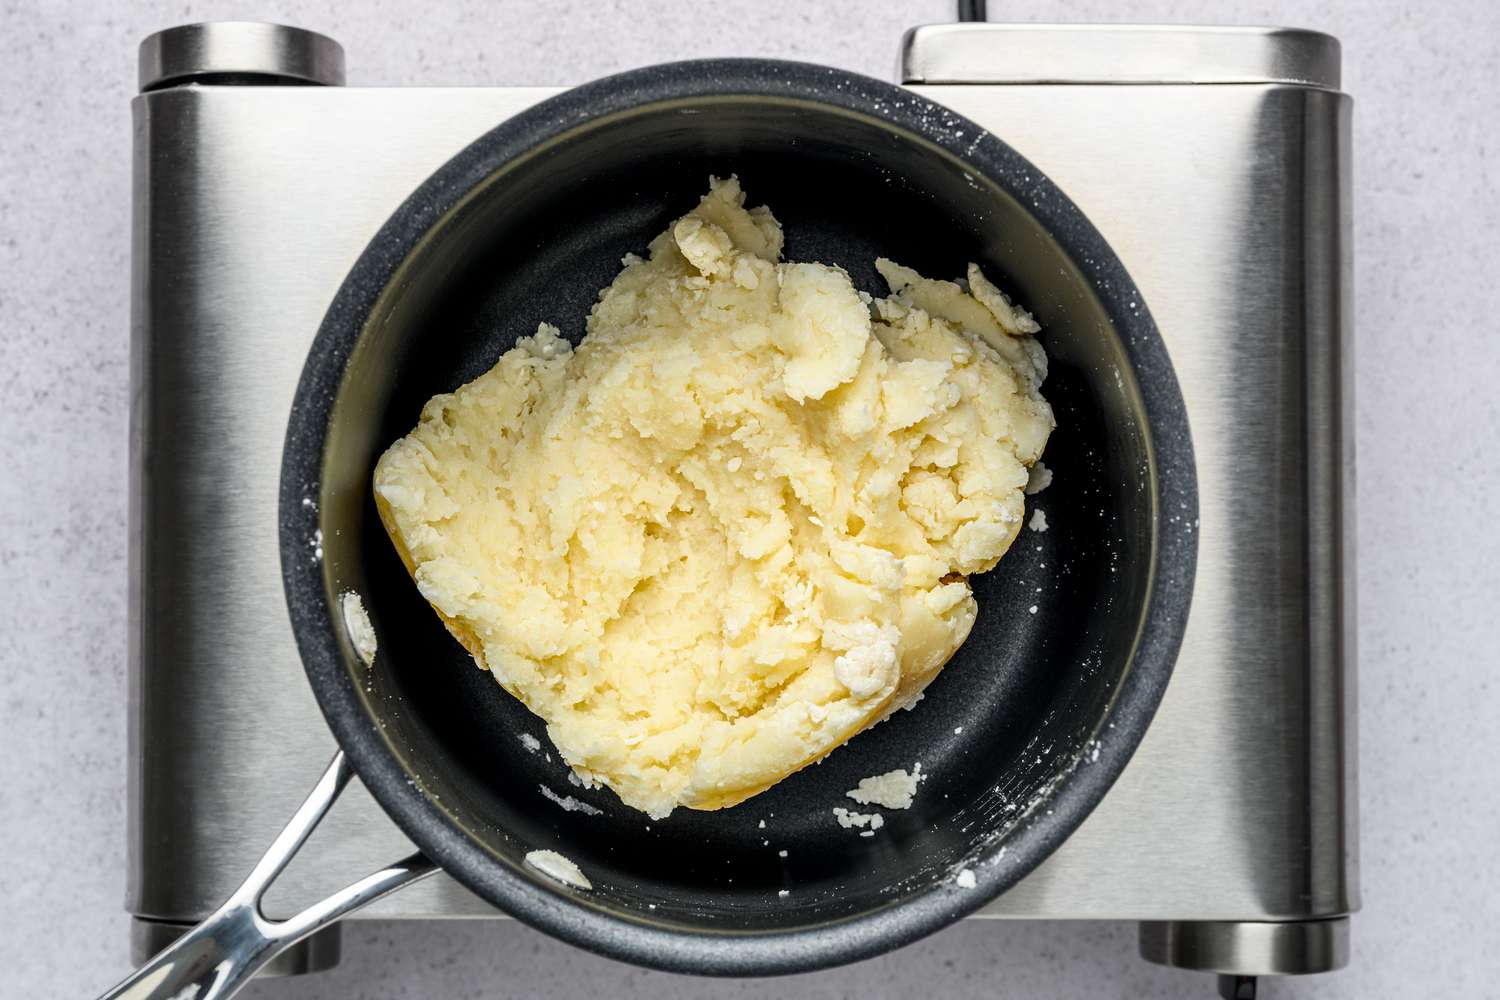 A pot with thick, lumpy dough